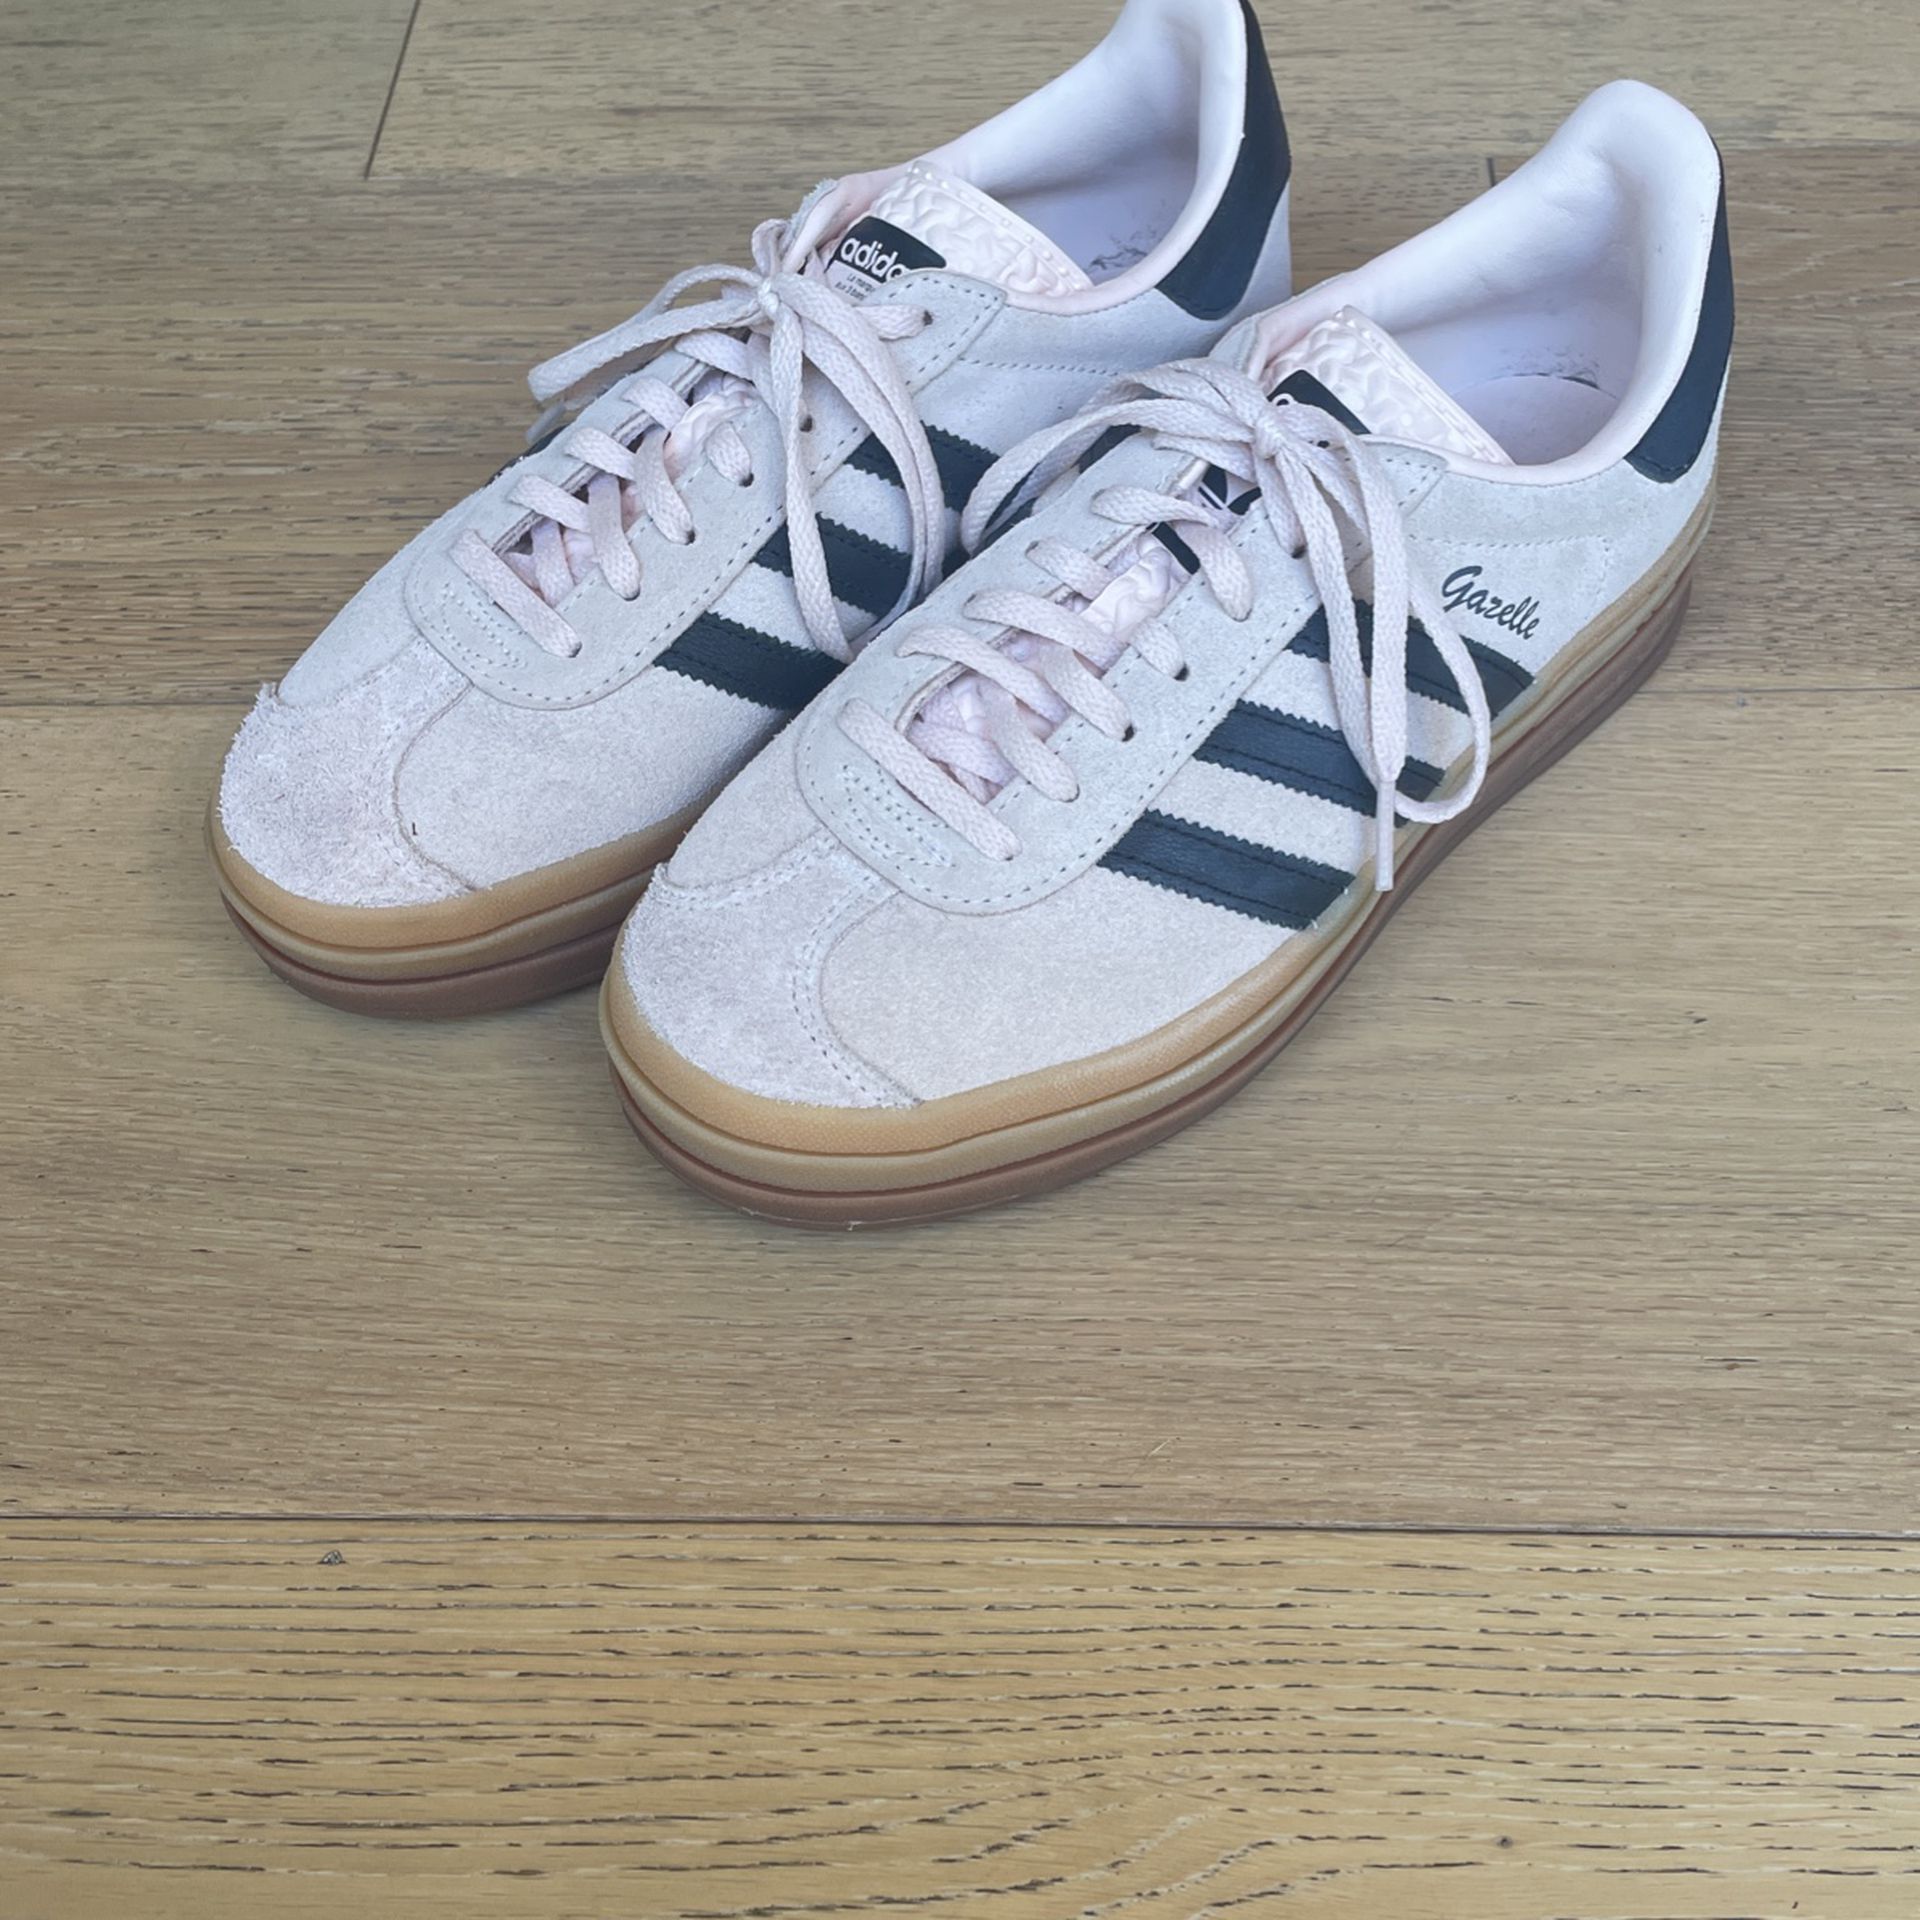 Adidas Gazelle Women’s Size 6.5 New